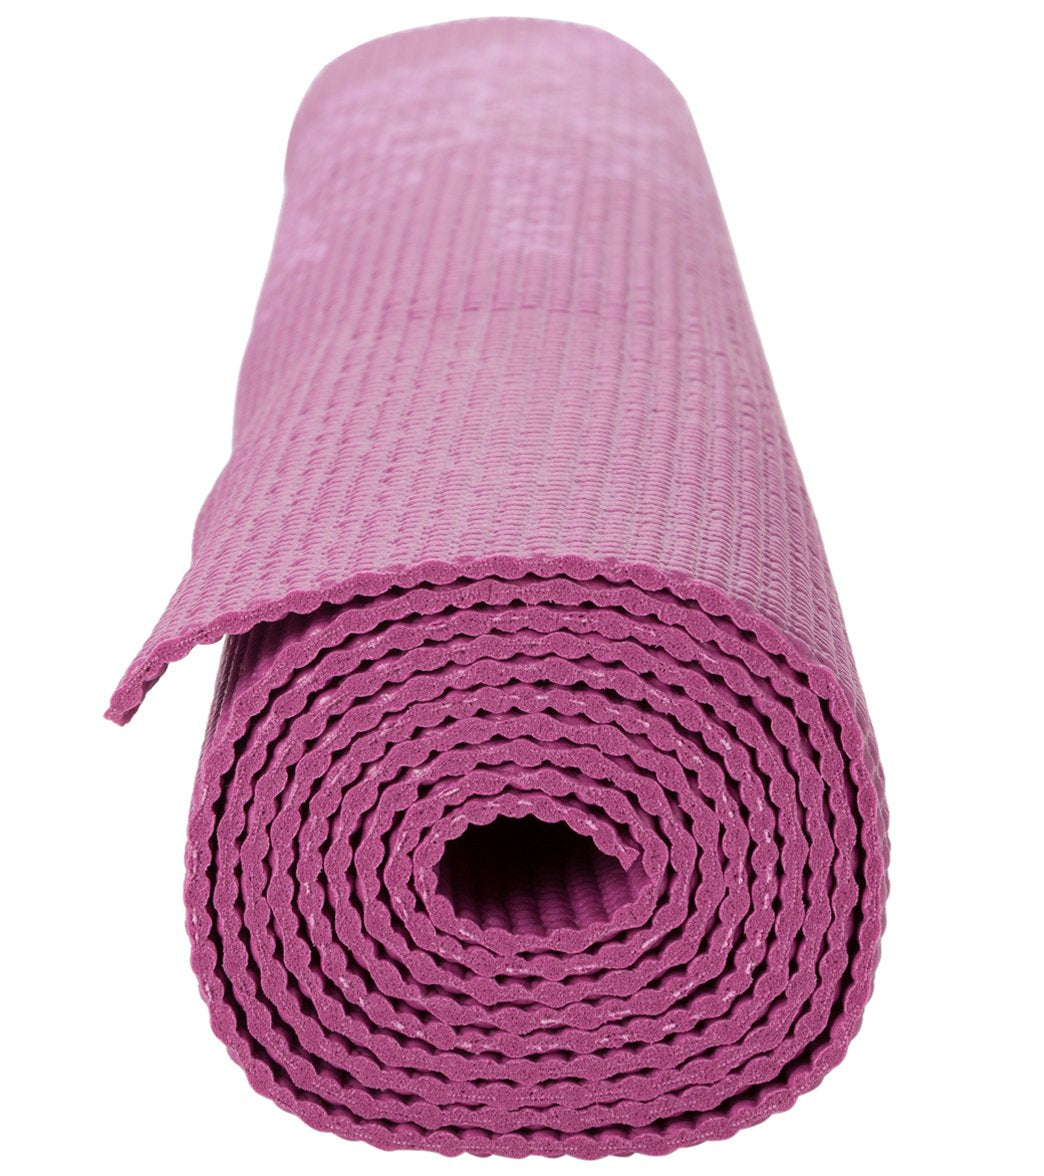 Gaiam Purple Medallion Classic Yoga Mat 68 4mm at